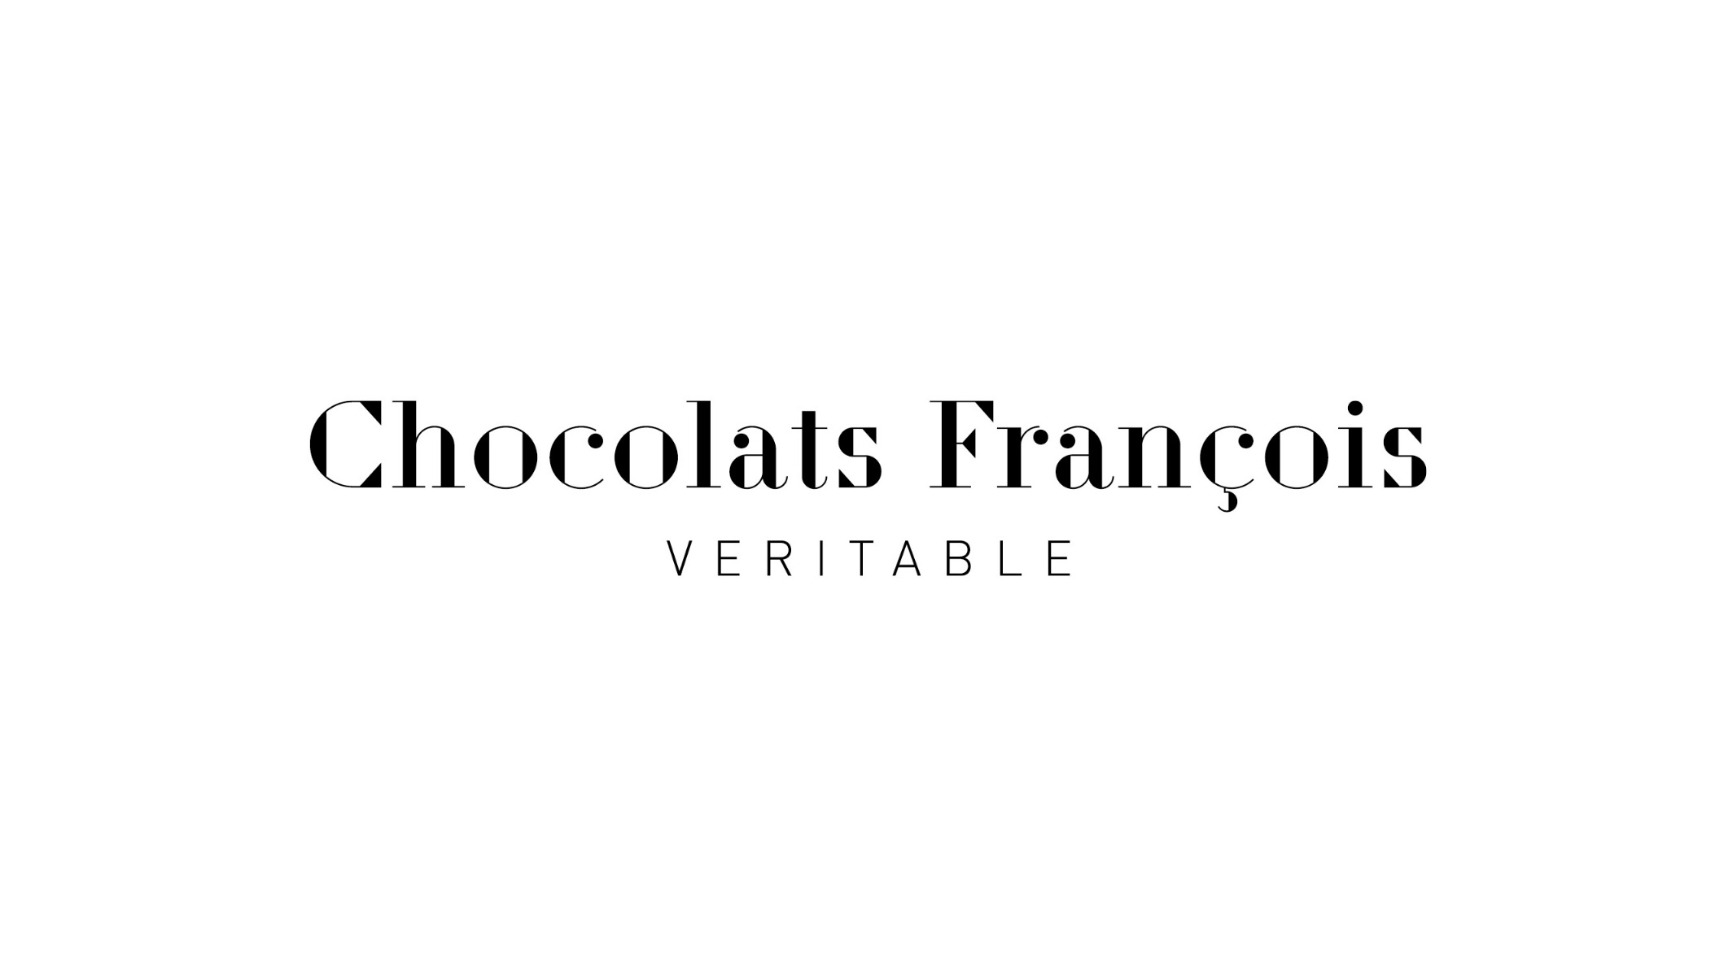 Chocolats François logo